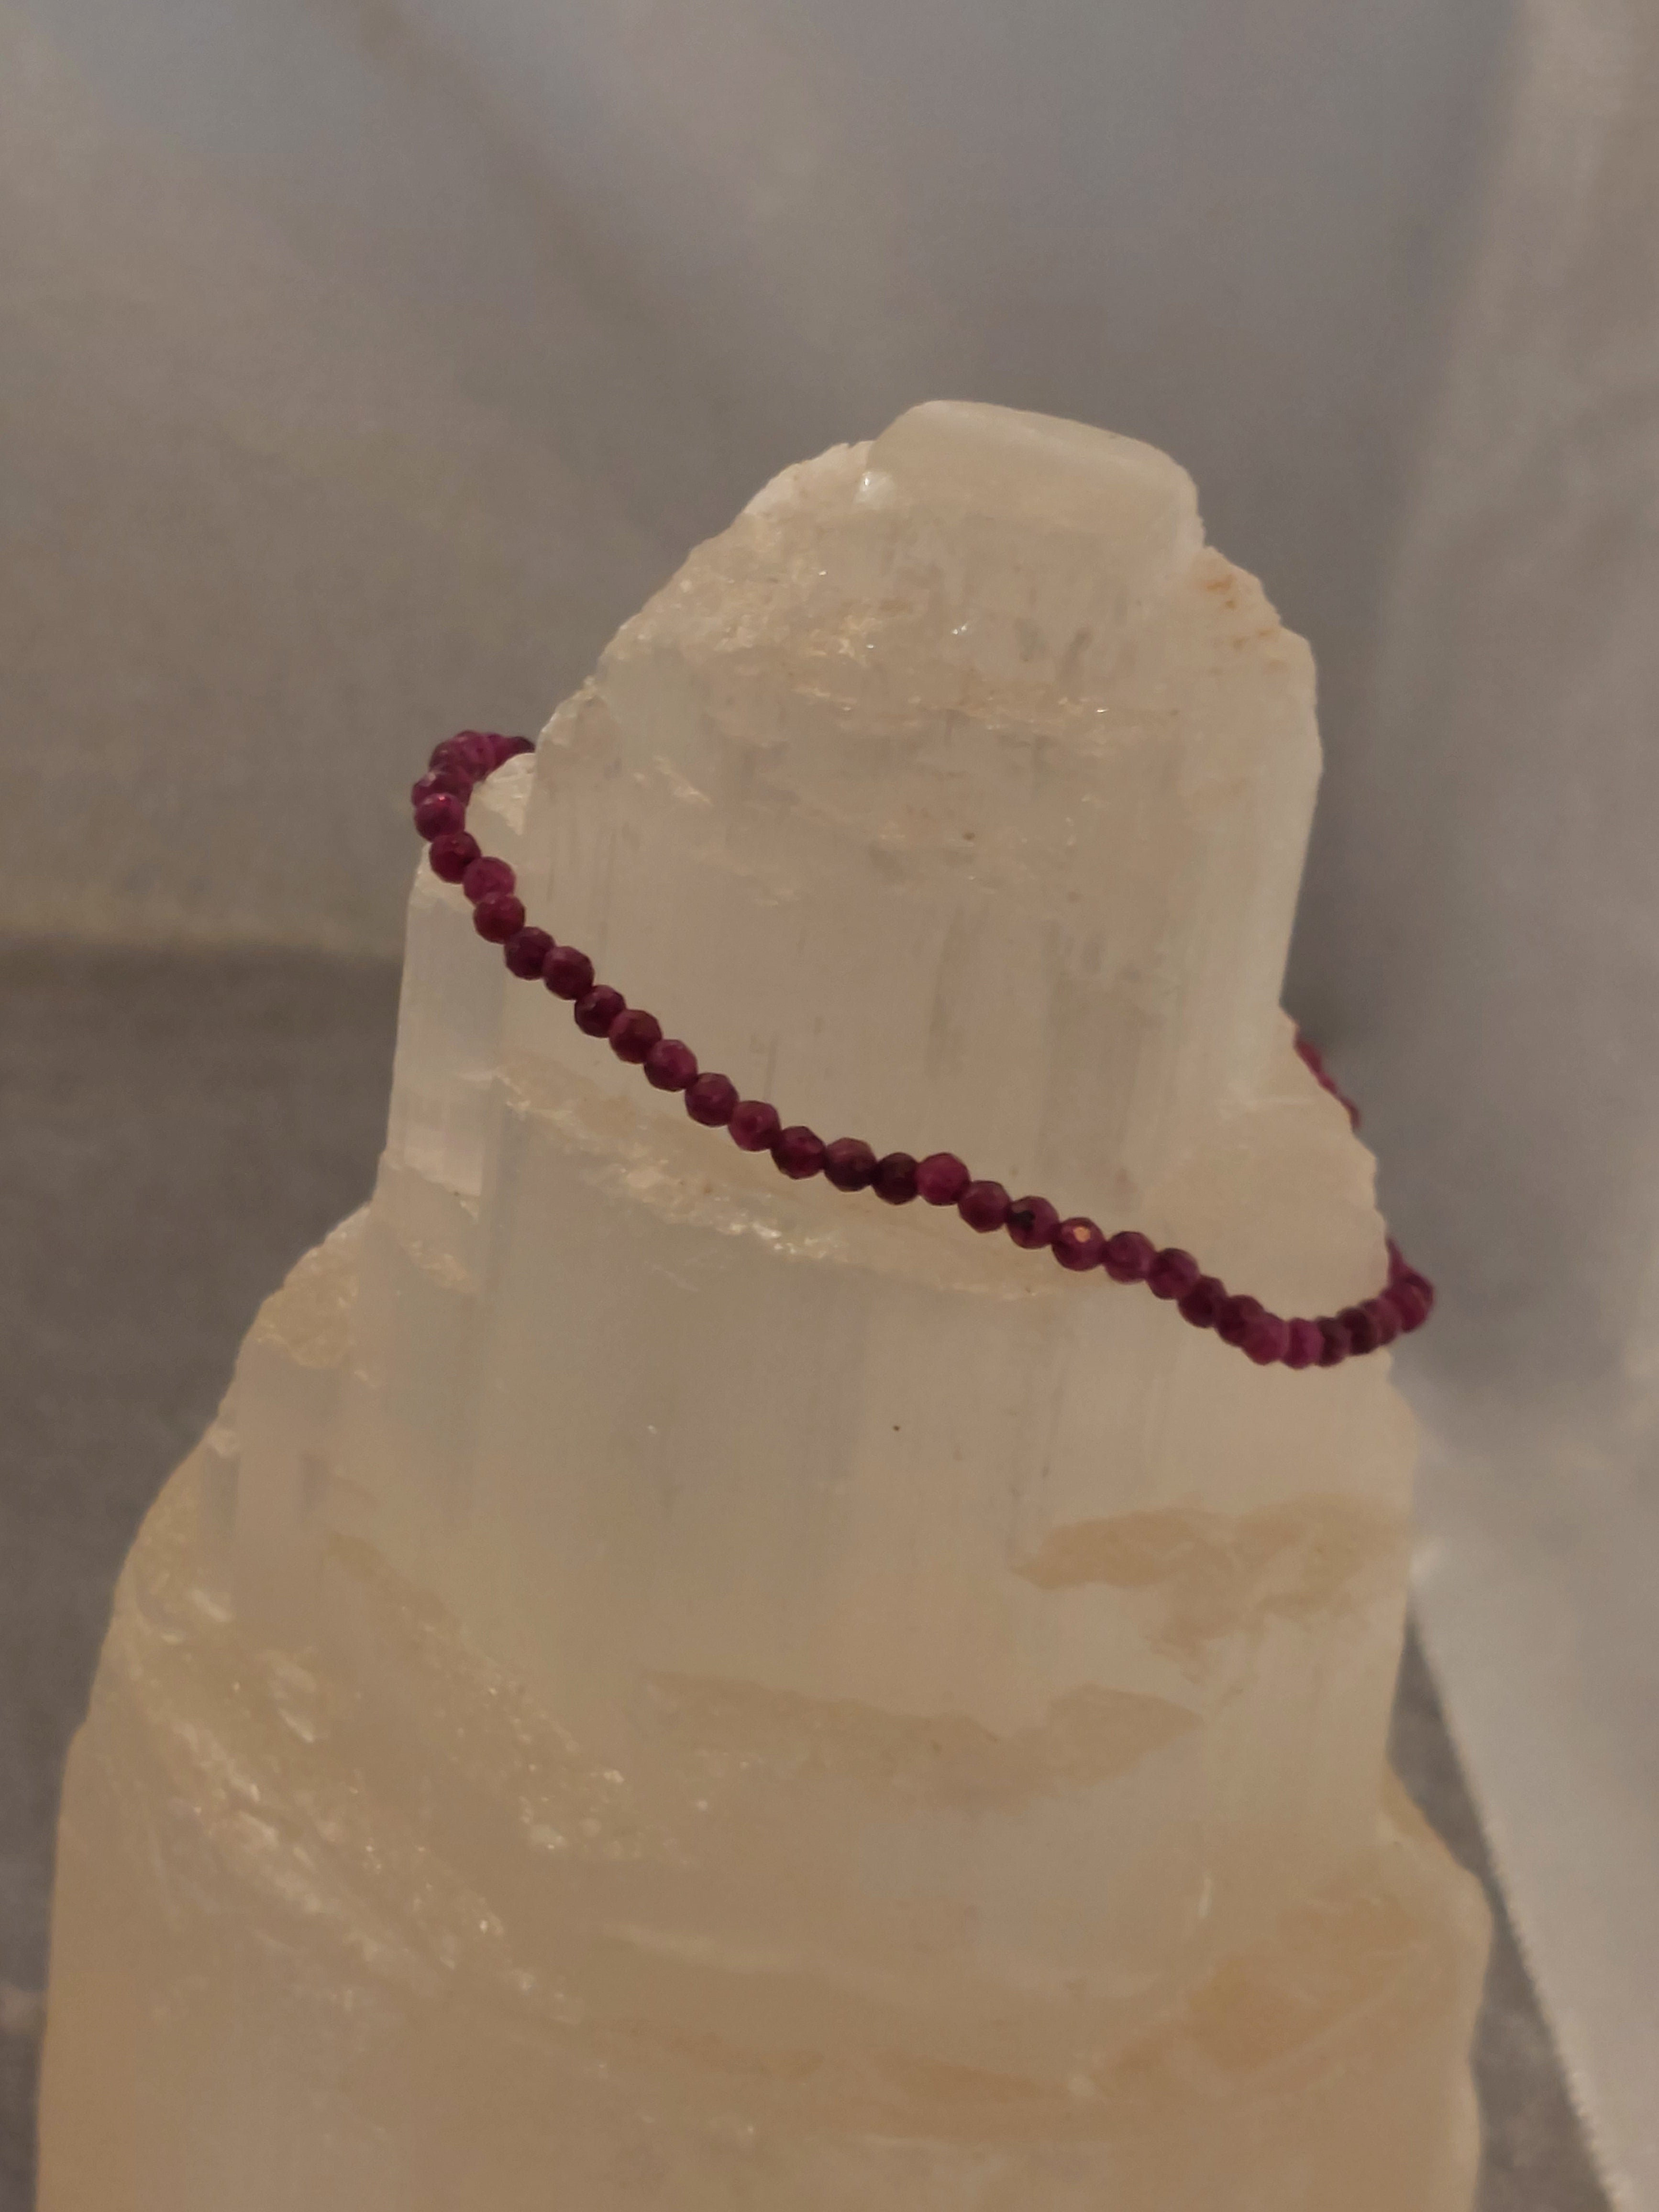 Ruby Faceted Bead Bracelet - 3mm Bead